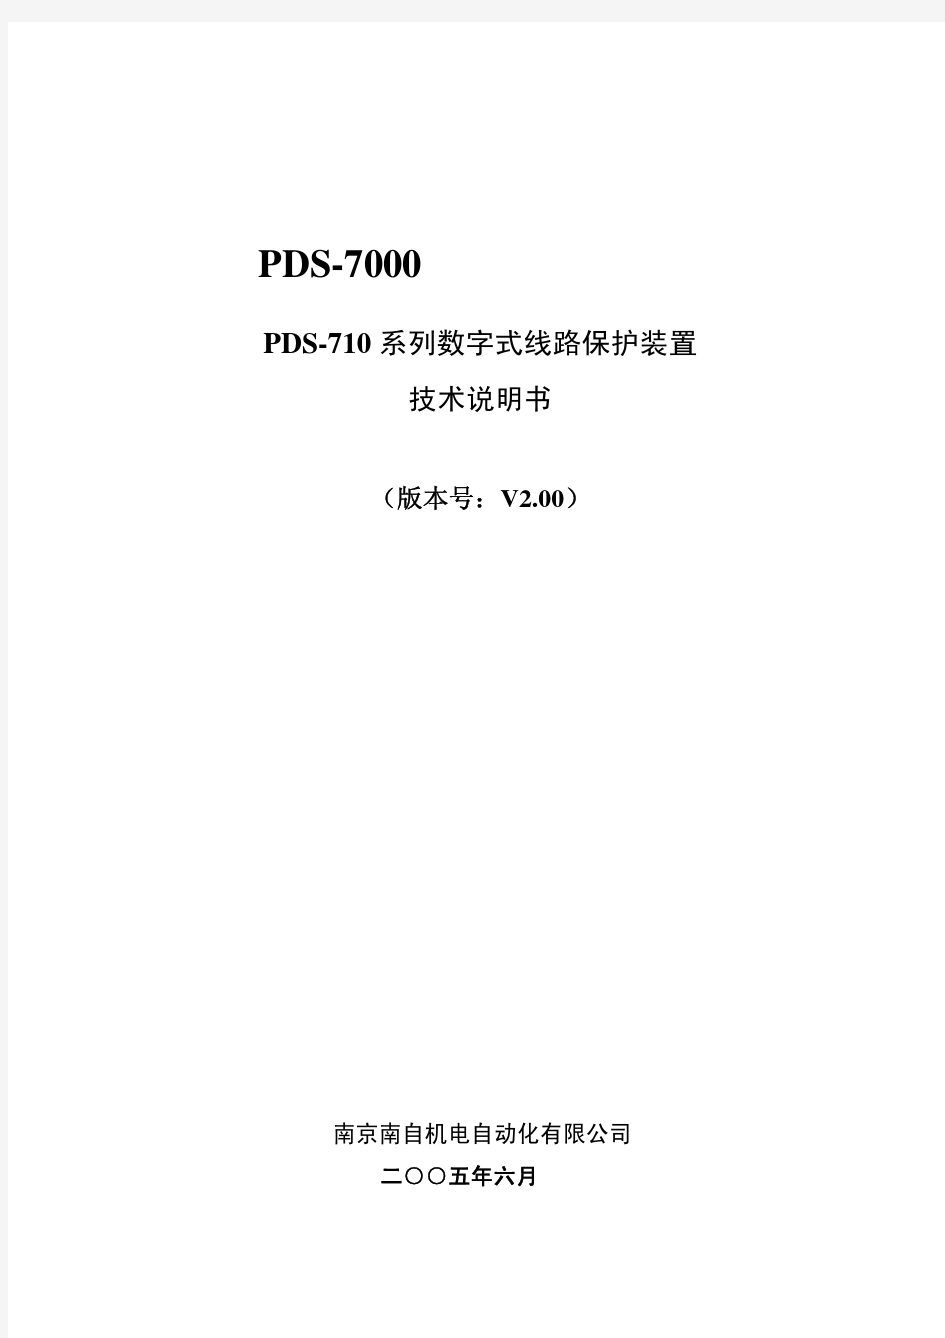 PDS710数字式线路保护装置技术说明书_040317)